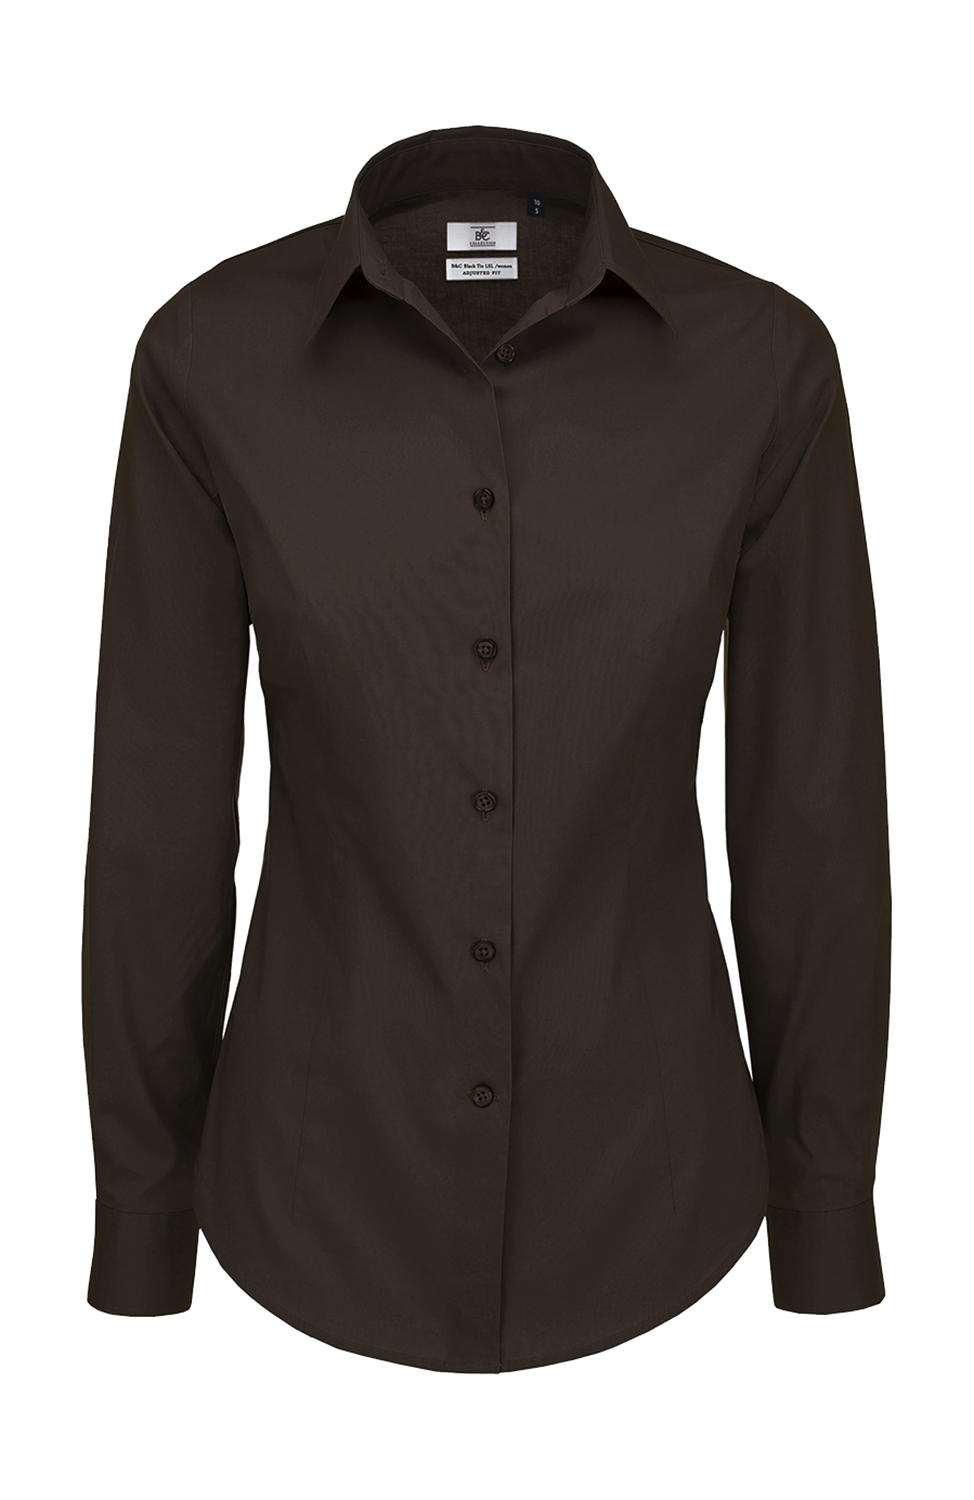  Black Tie LSL/women Poplin Shirt in Farbe Coffee Bean